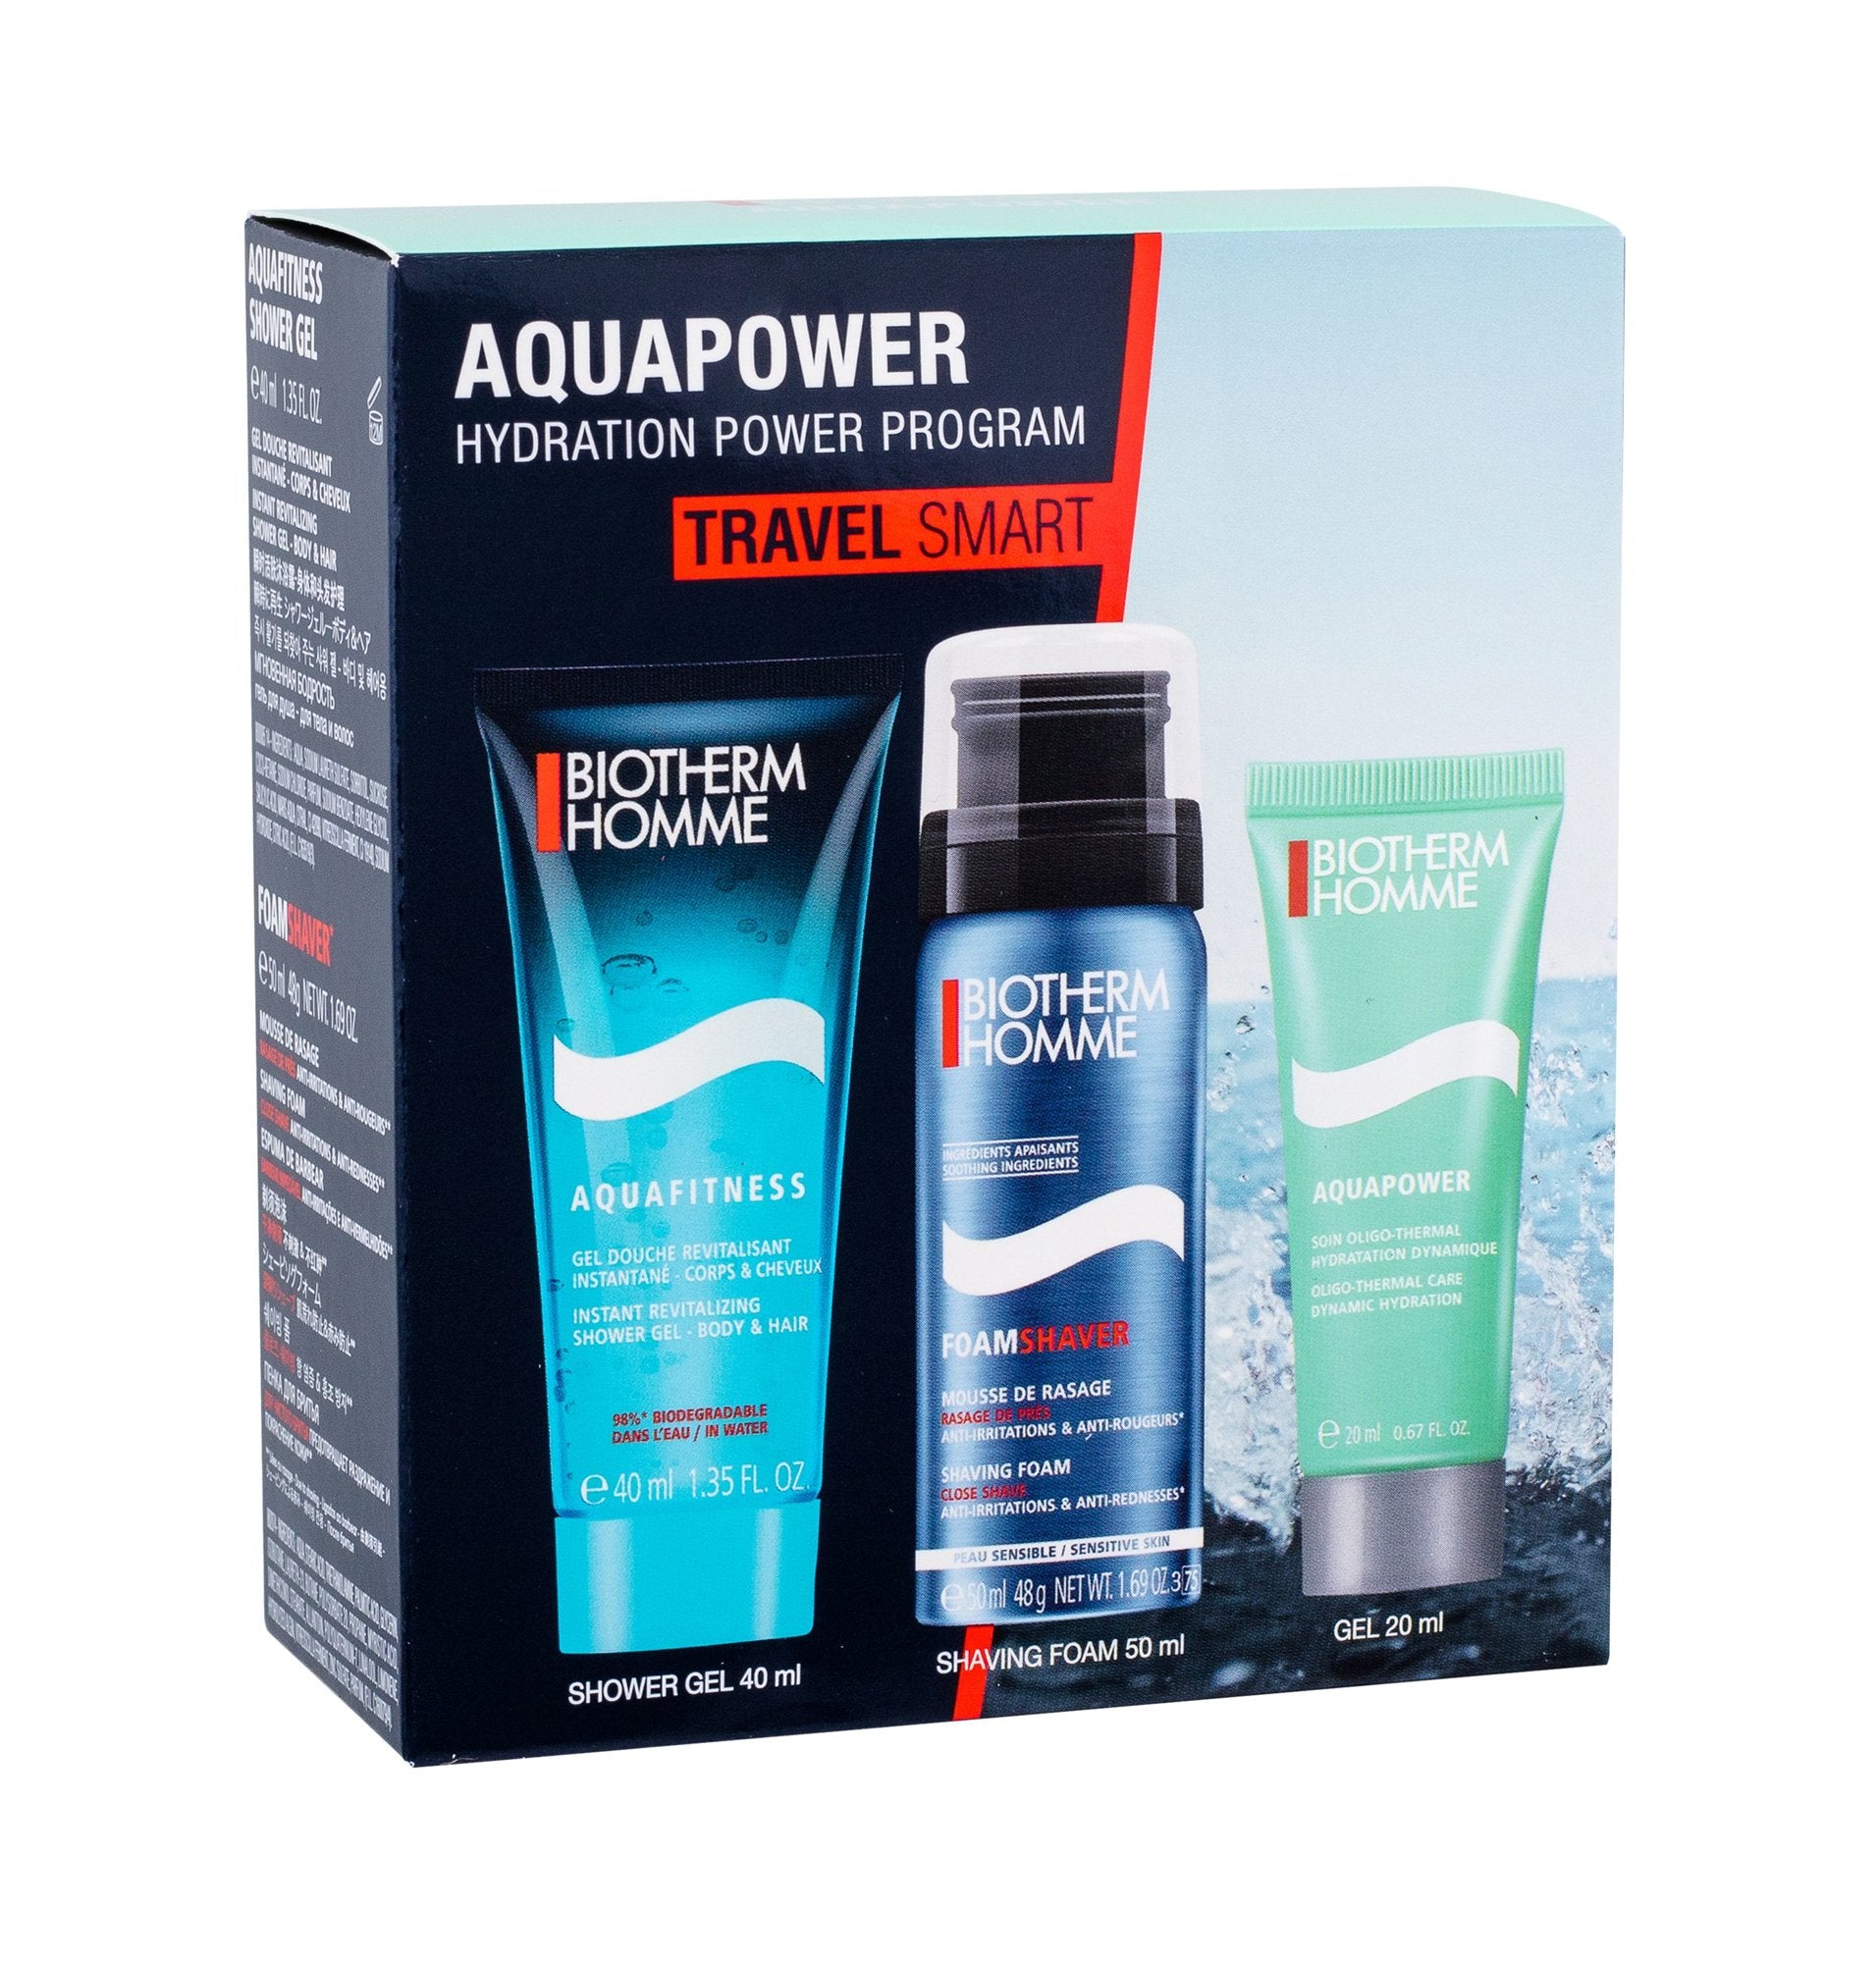 Homme Aquapower Day Tripper: Hower Gel 40 Ml, Shaving Foam 50 Ml, Aquapower Moisturizer 20 Ml *D1